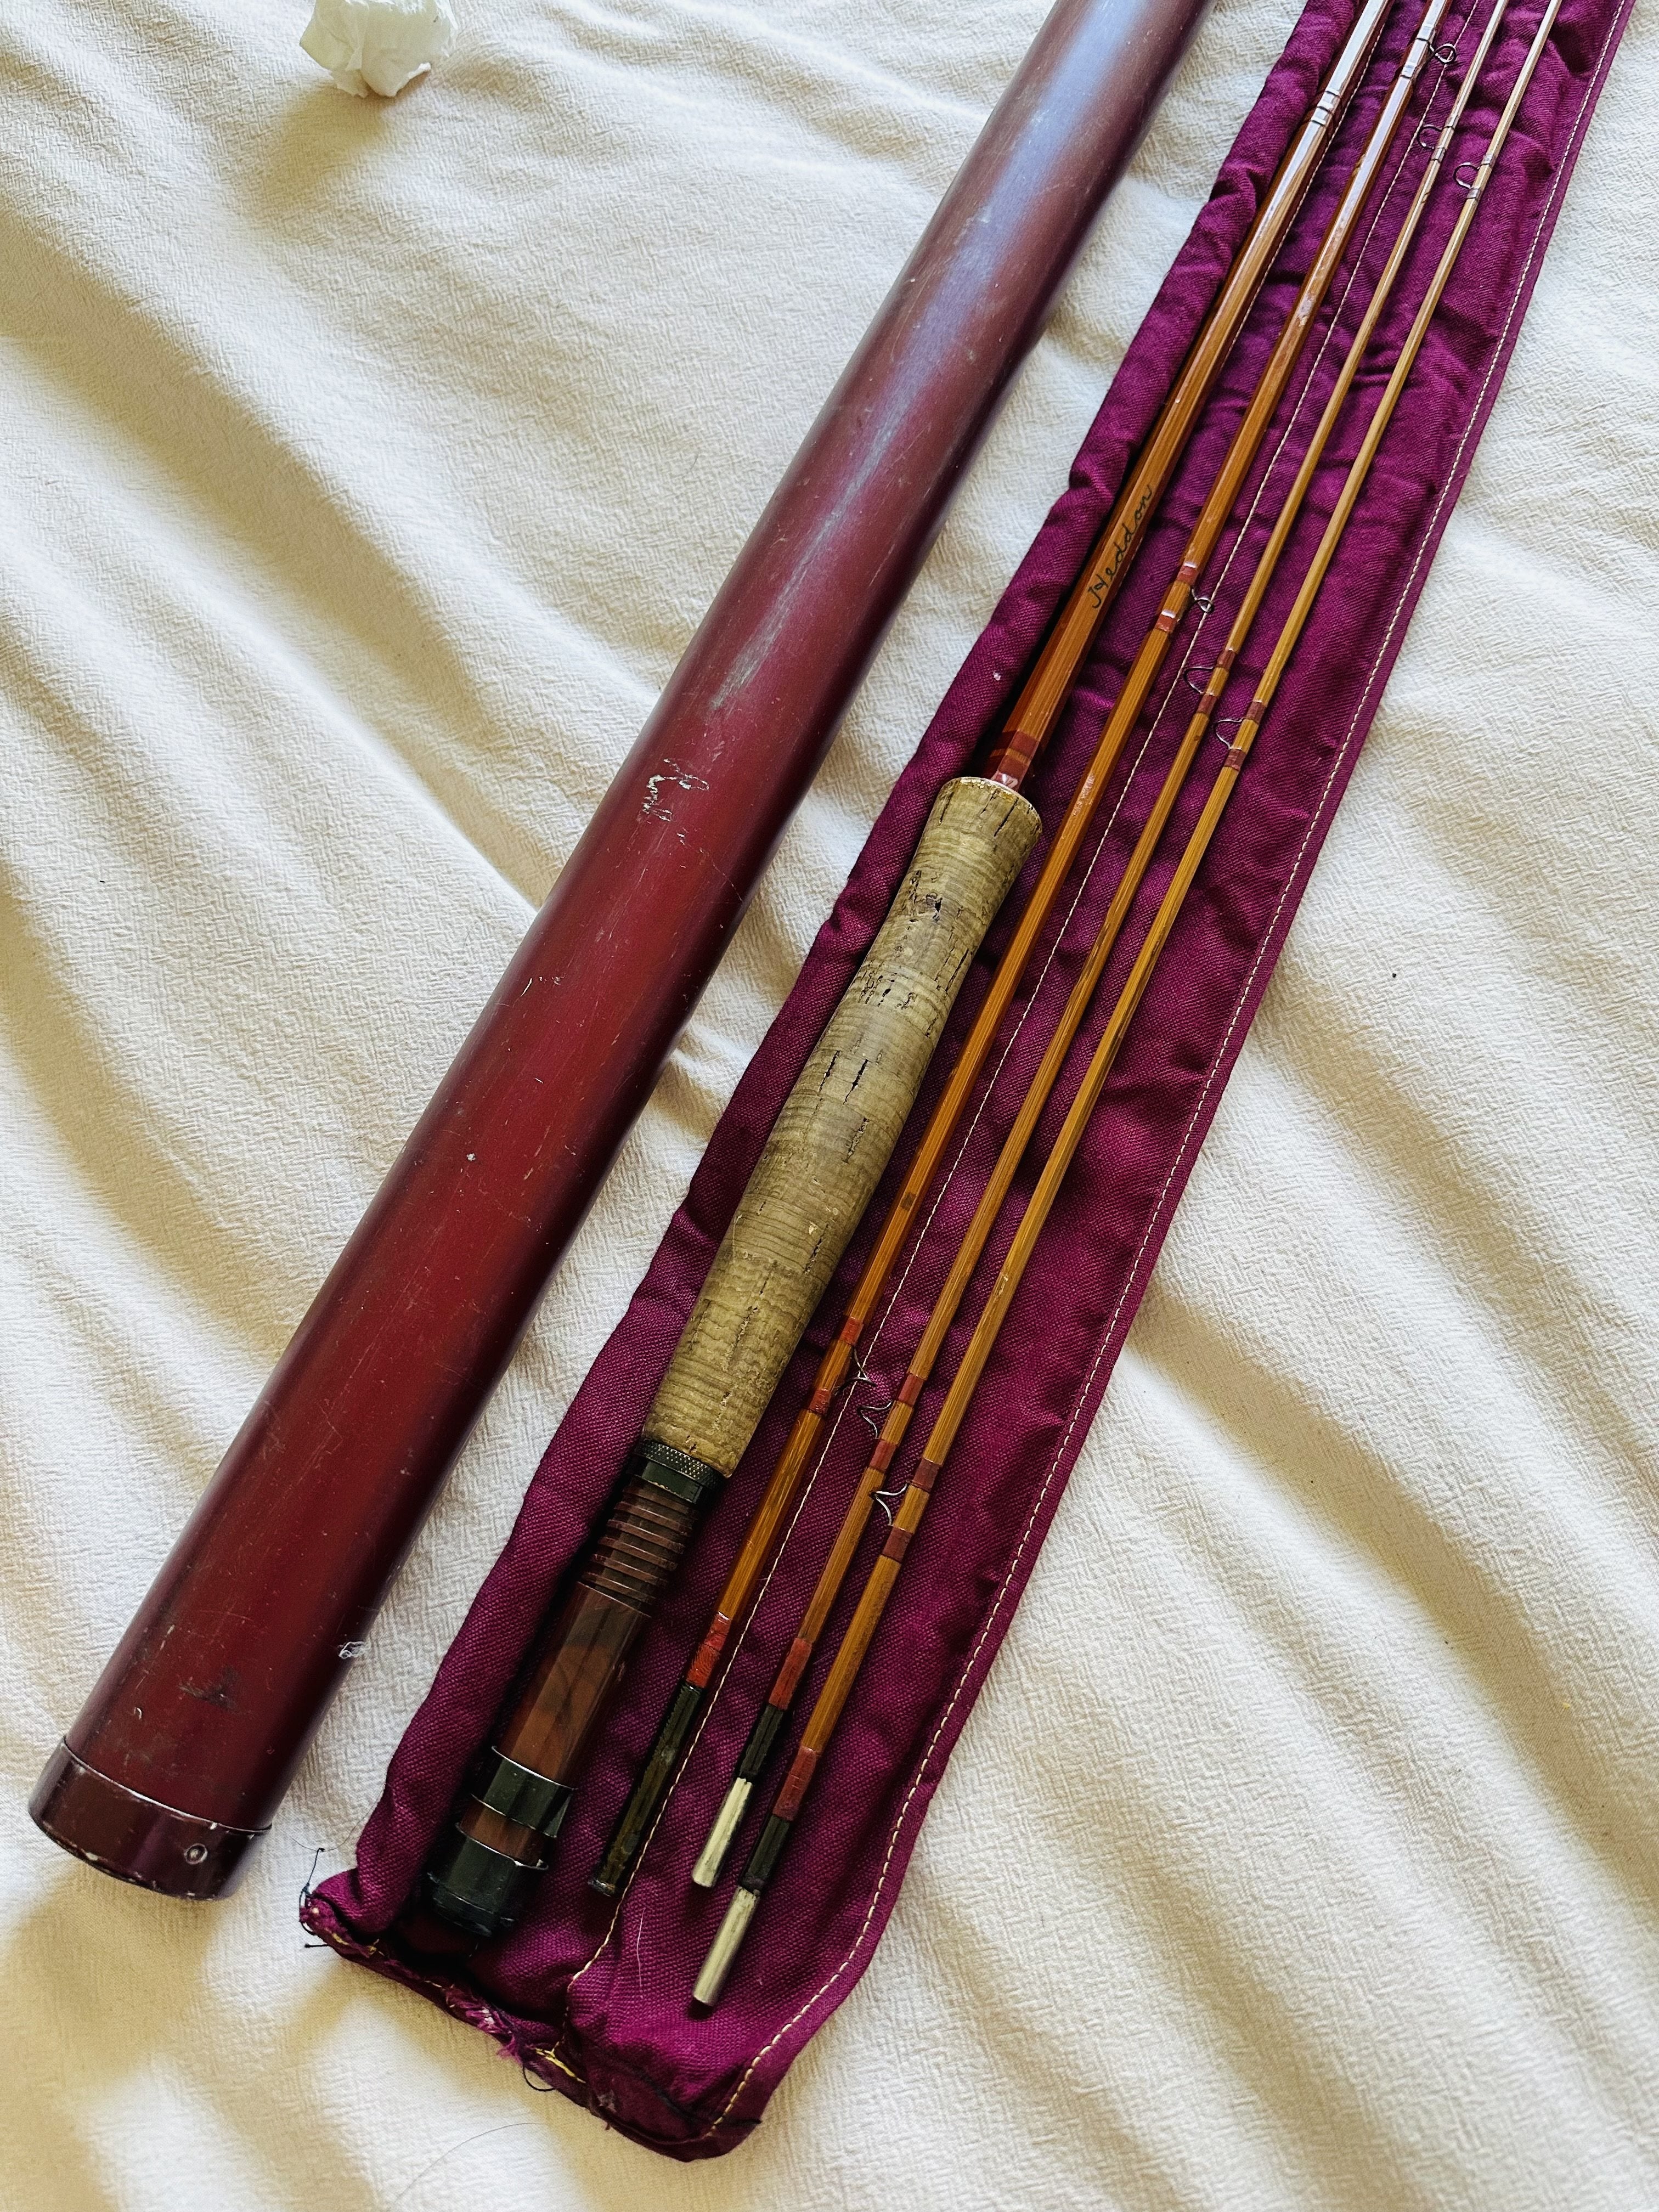 Heddon #20 (Bill Stanley’s Favorite) 9ft 2 3/4f (7/8wt) bamboo rod